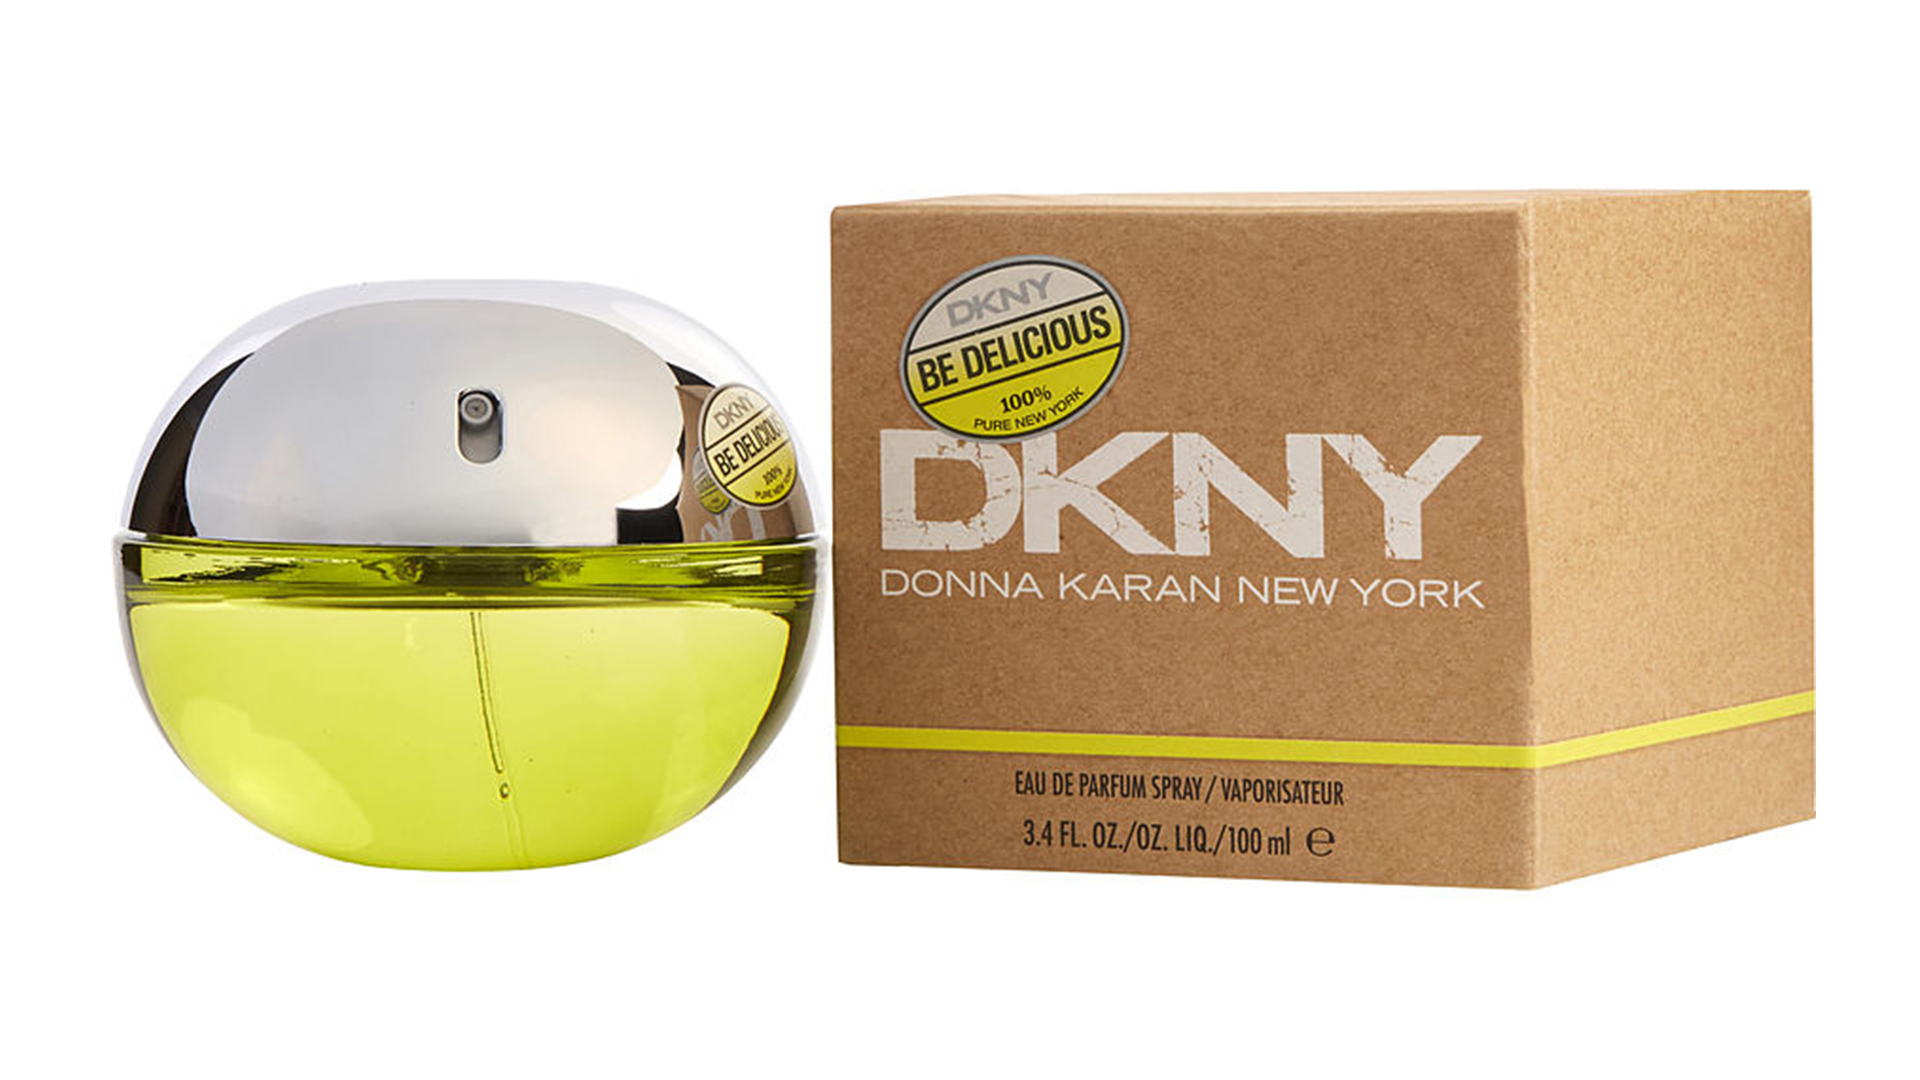 Dkny be delicious яблоко. DKNY be delicious 30 мл. Donna Karan DKNY be delicious, EDP, 100 ml. Донна Каран Нью-Йорк зеленое яблоко 100 мл. Туалетная вода Донна Каран Нью-Йорк.